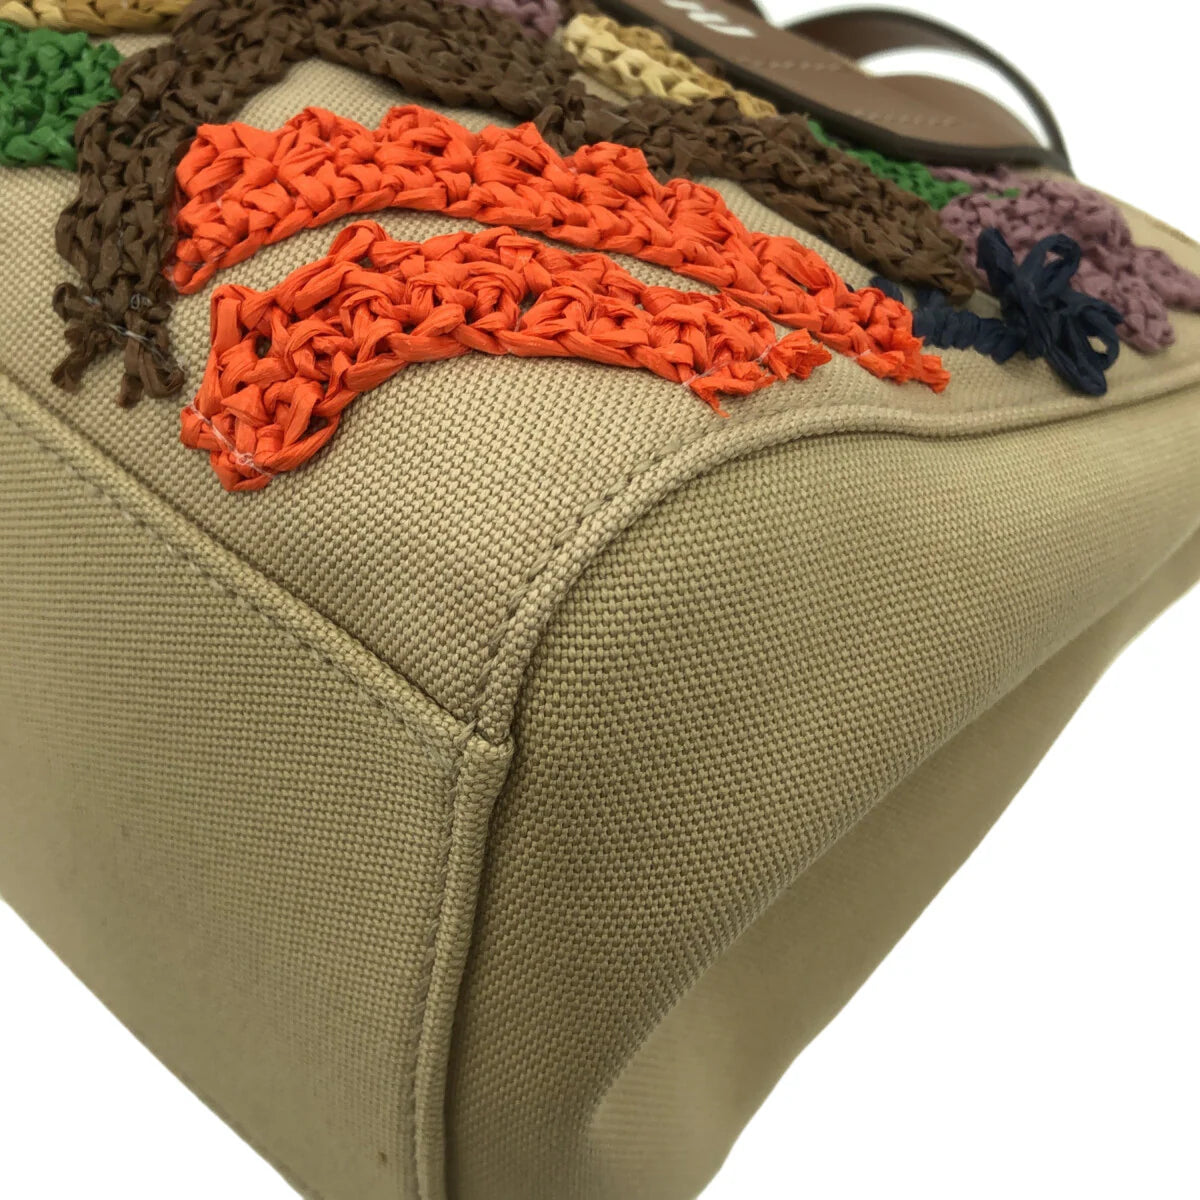 MIUMIU - Tote Bag Beige Orange Multi Canvas Chemical Fiber Leather